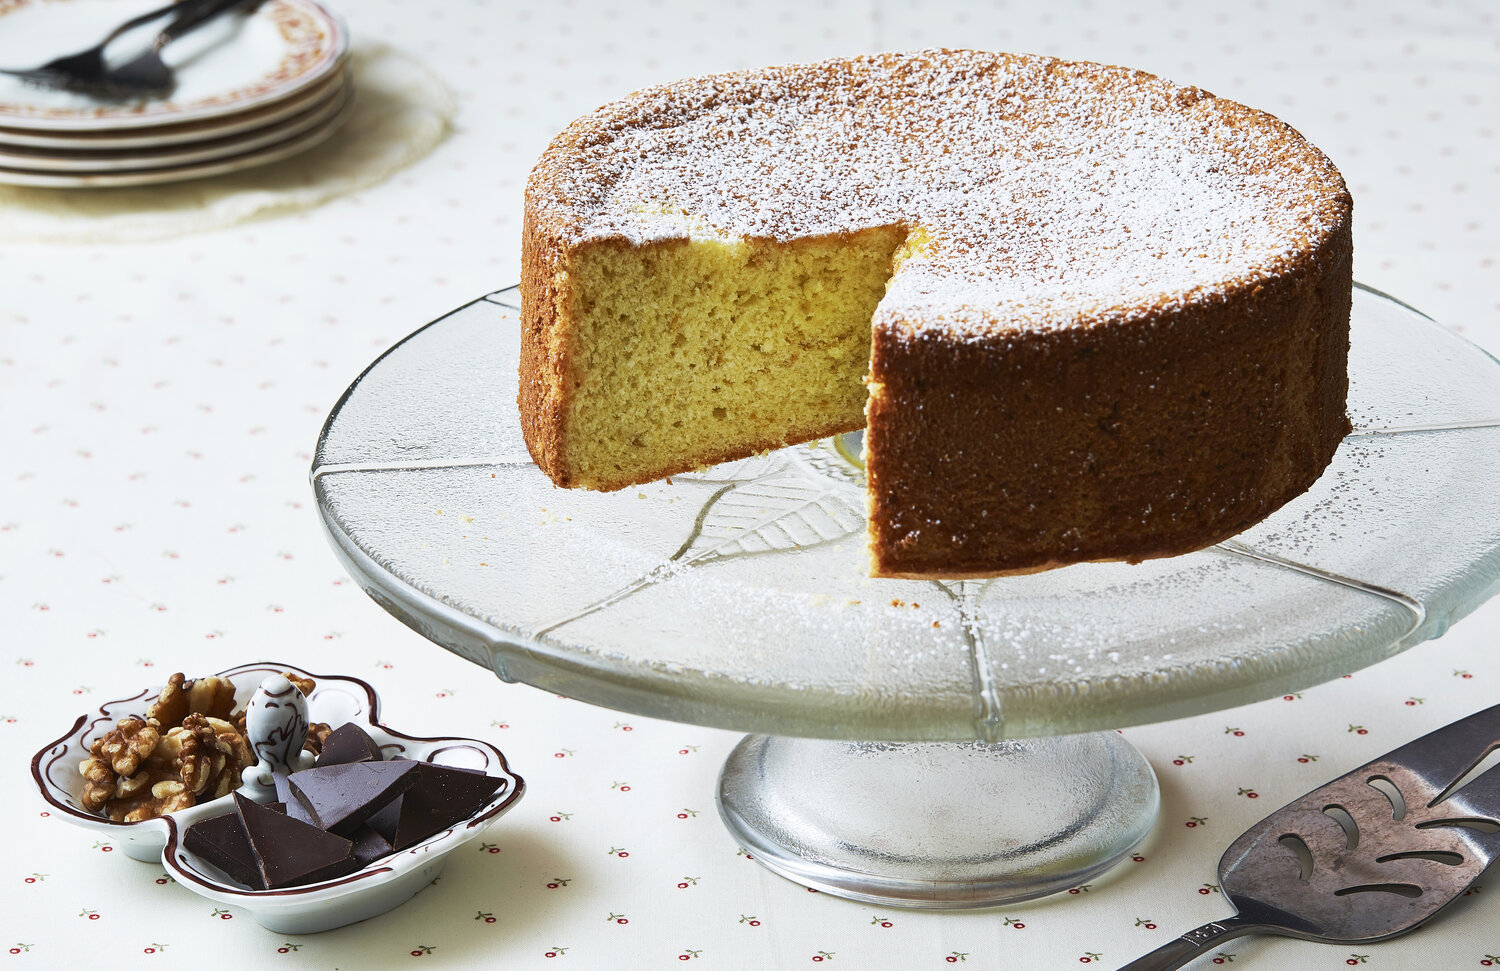 Saturday tasty treat: Three-ingredient sponge cake recipe | The Citizen